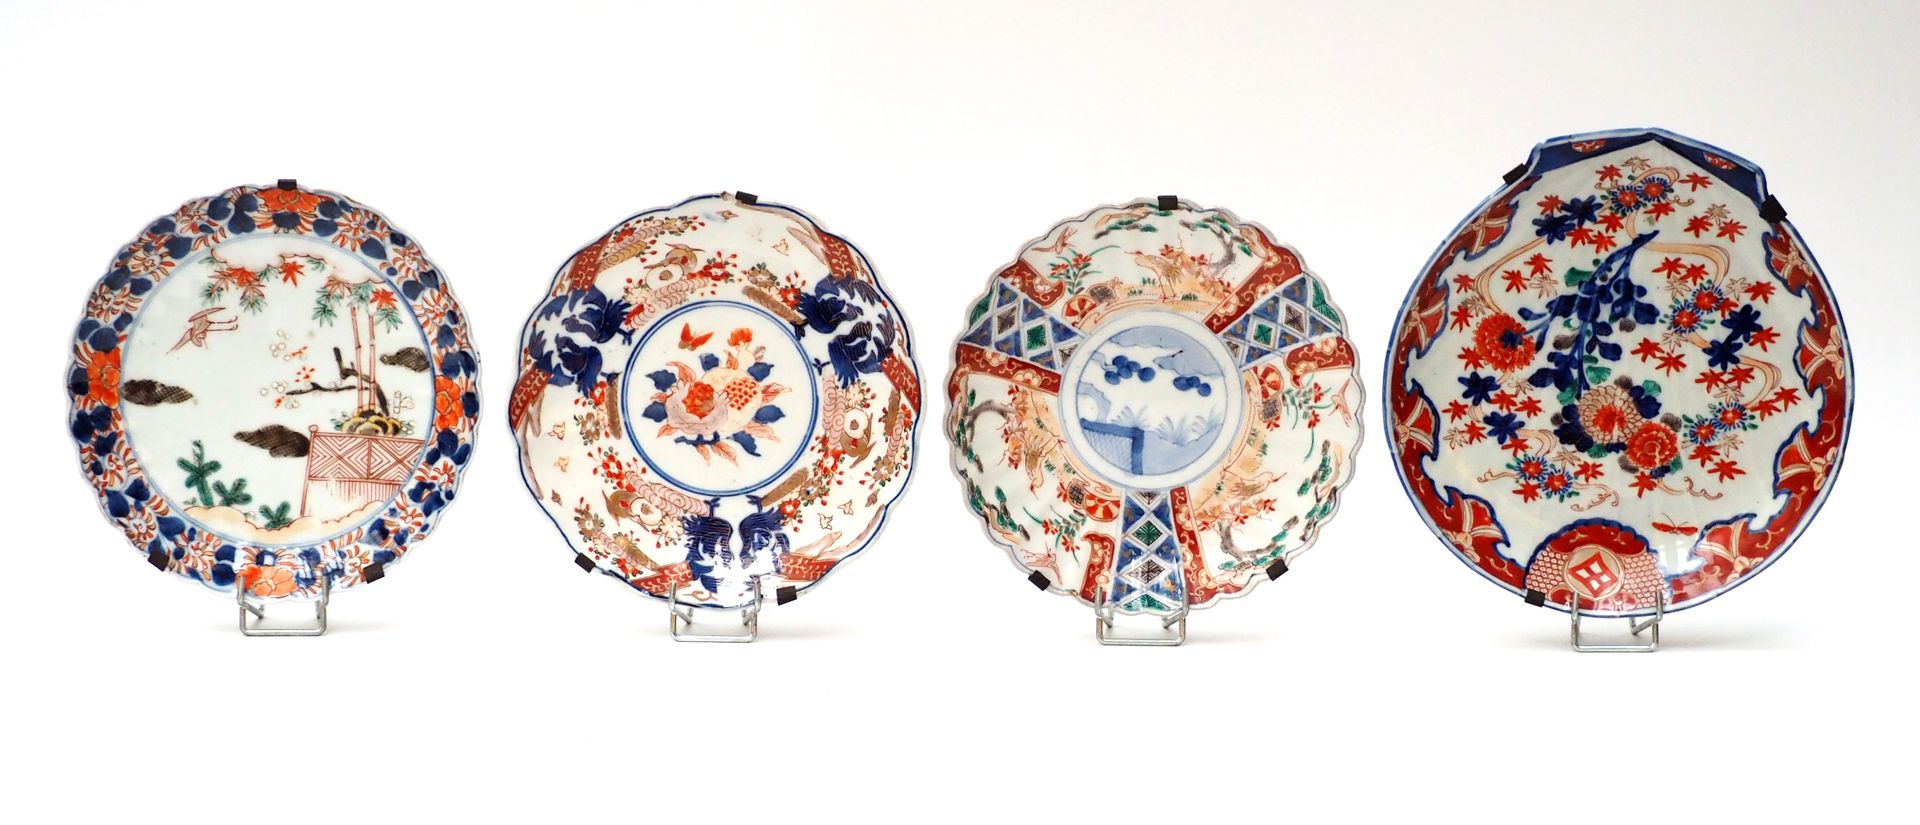 Null 日本
一套四个瓷盘，带有蓝色、红色和金色伊万里花卉、山水和鸟类装饰
直径 21.5 至 24 厘米

碎片